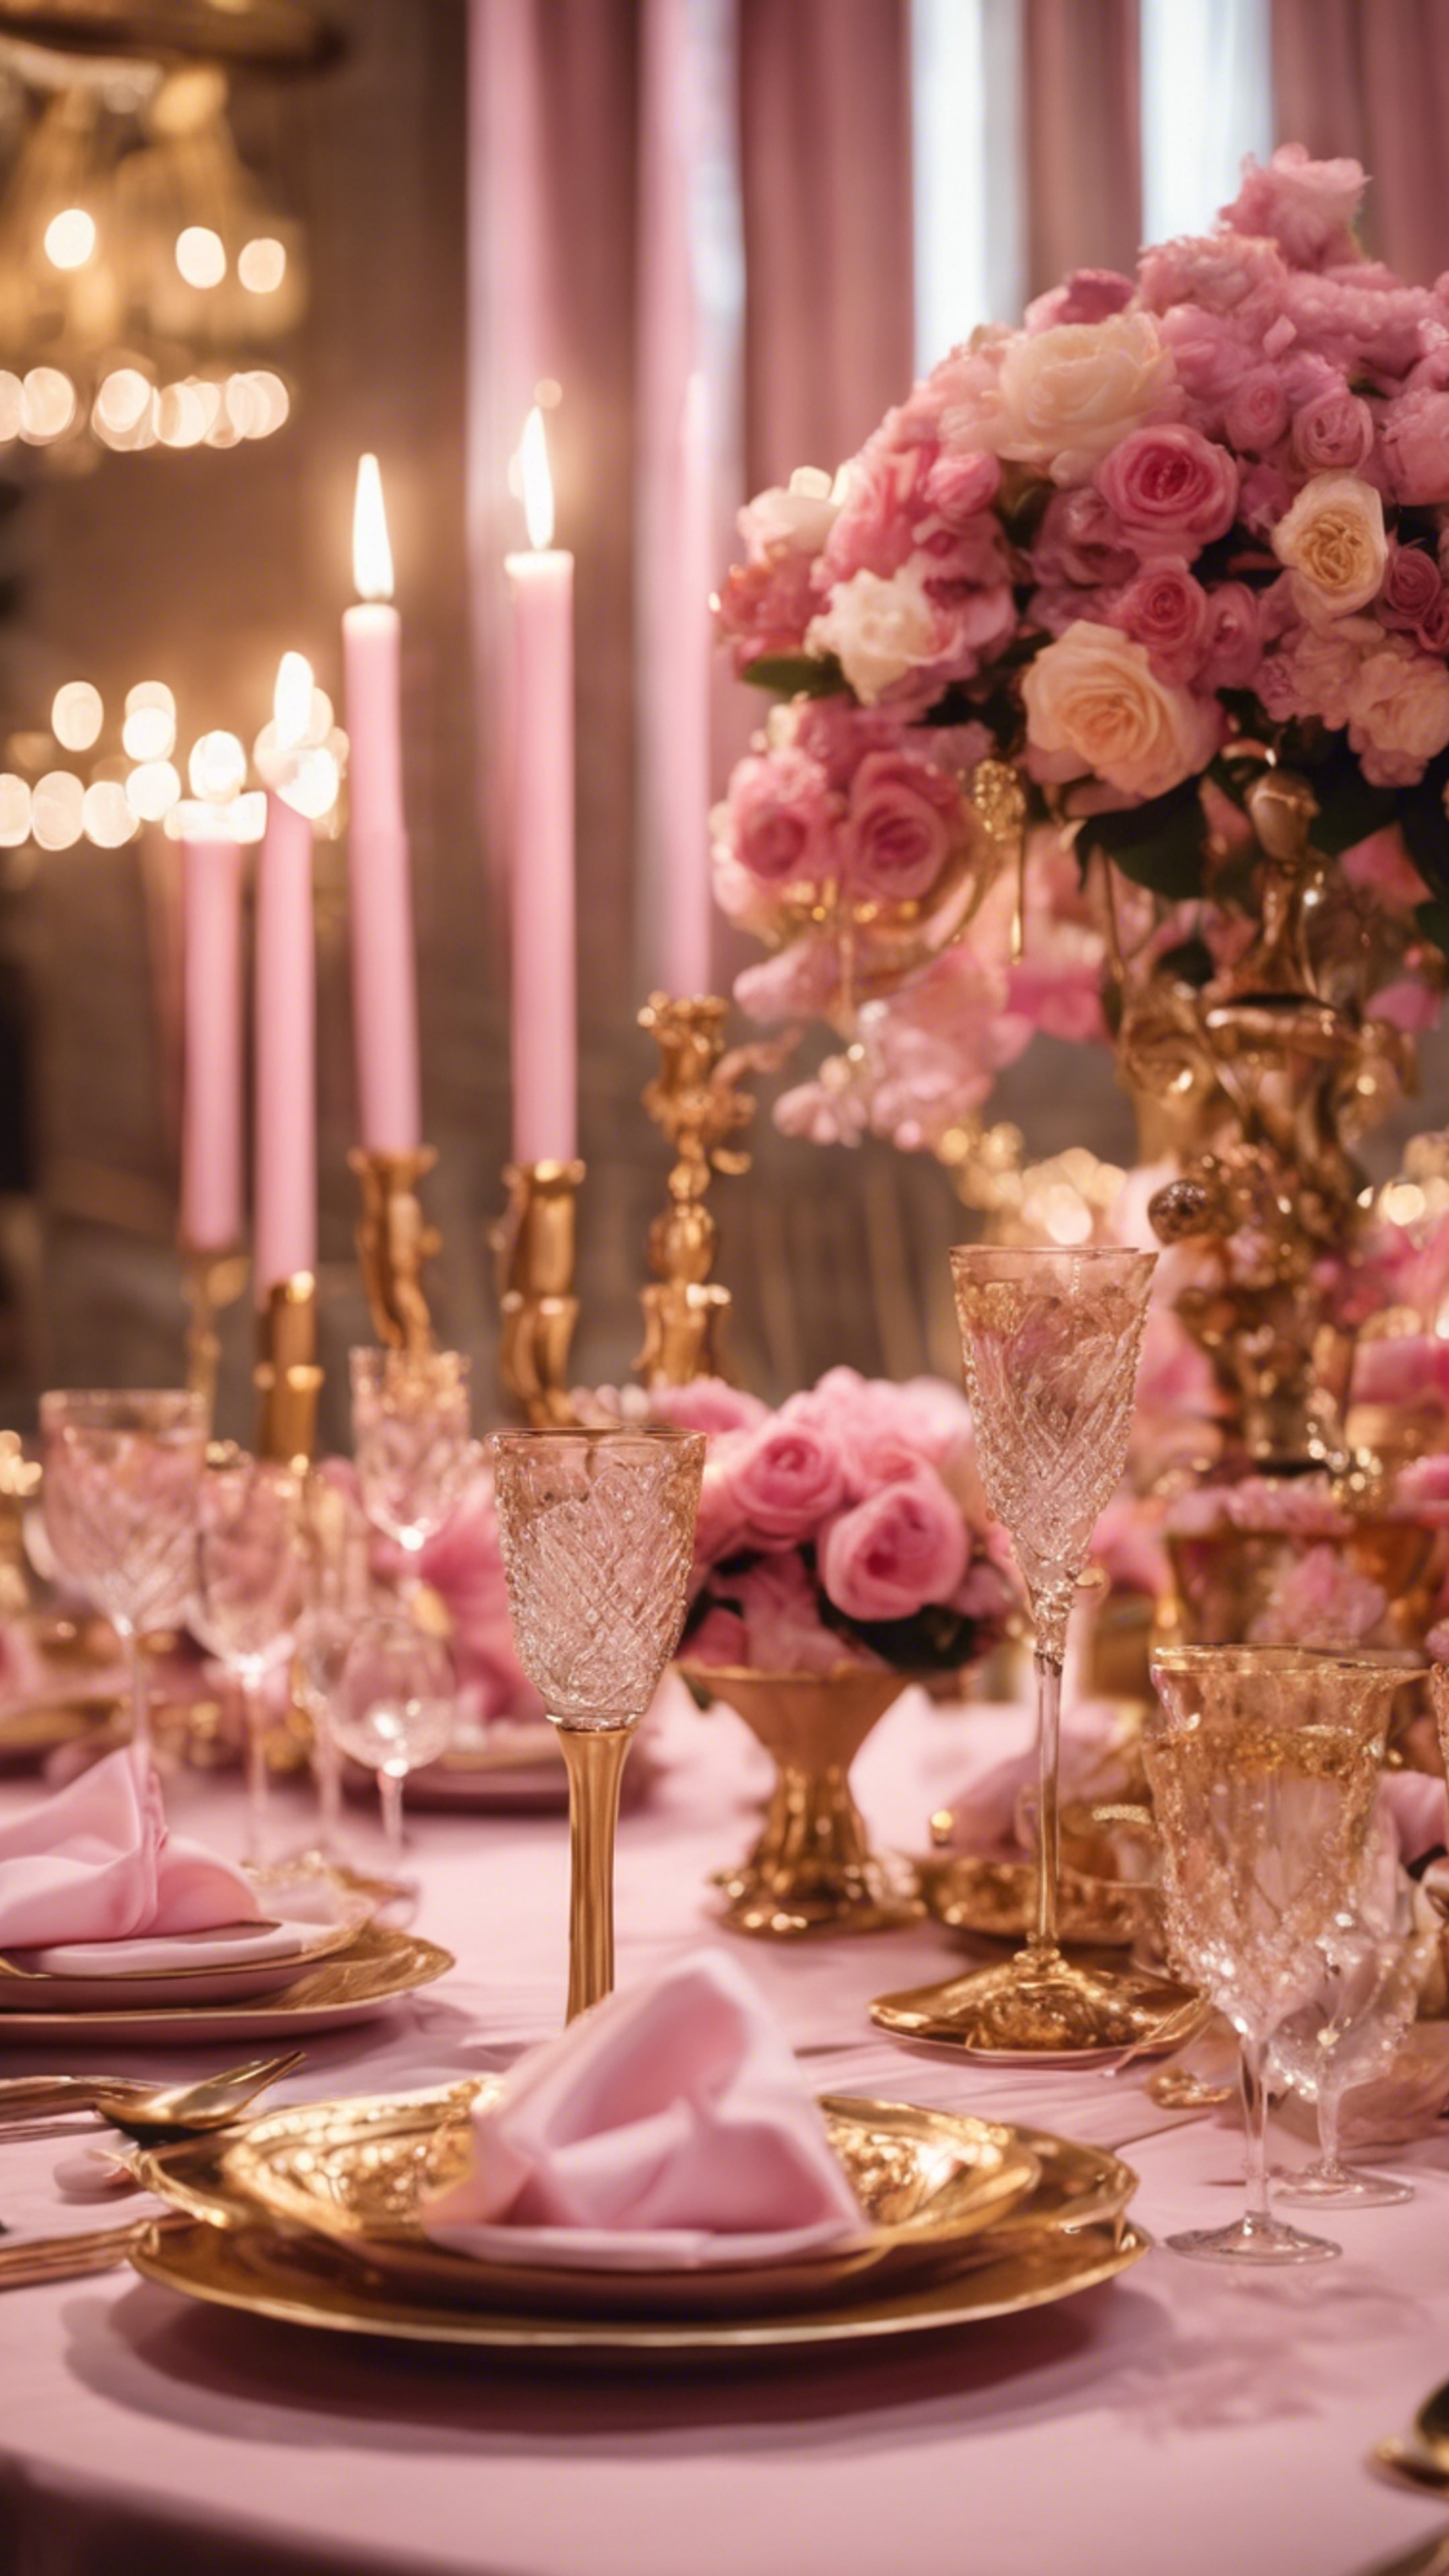 An elegant pink and gold-themed dining table set for an evening soiree. duvar kağıdı[a96f4c3be44f41948a30]